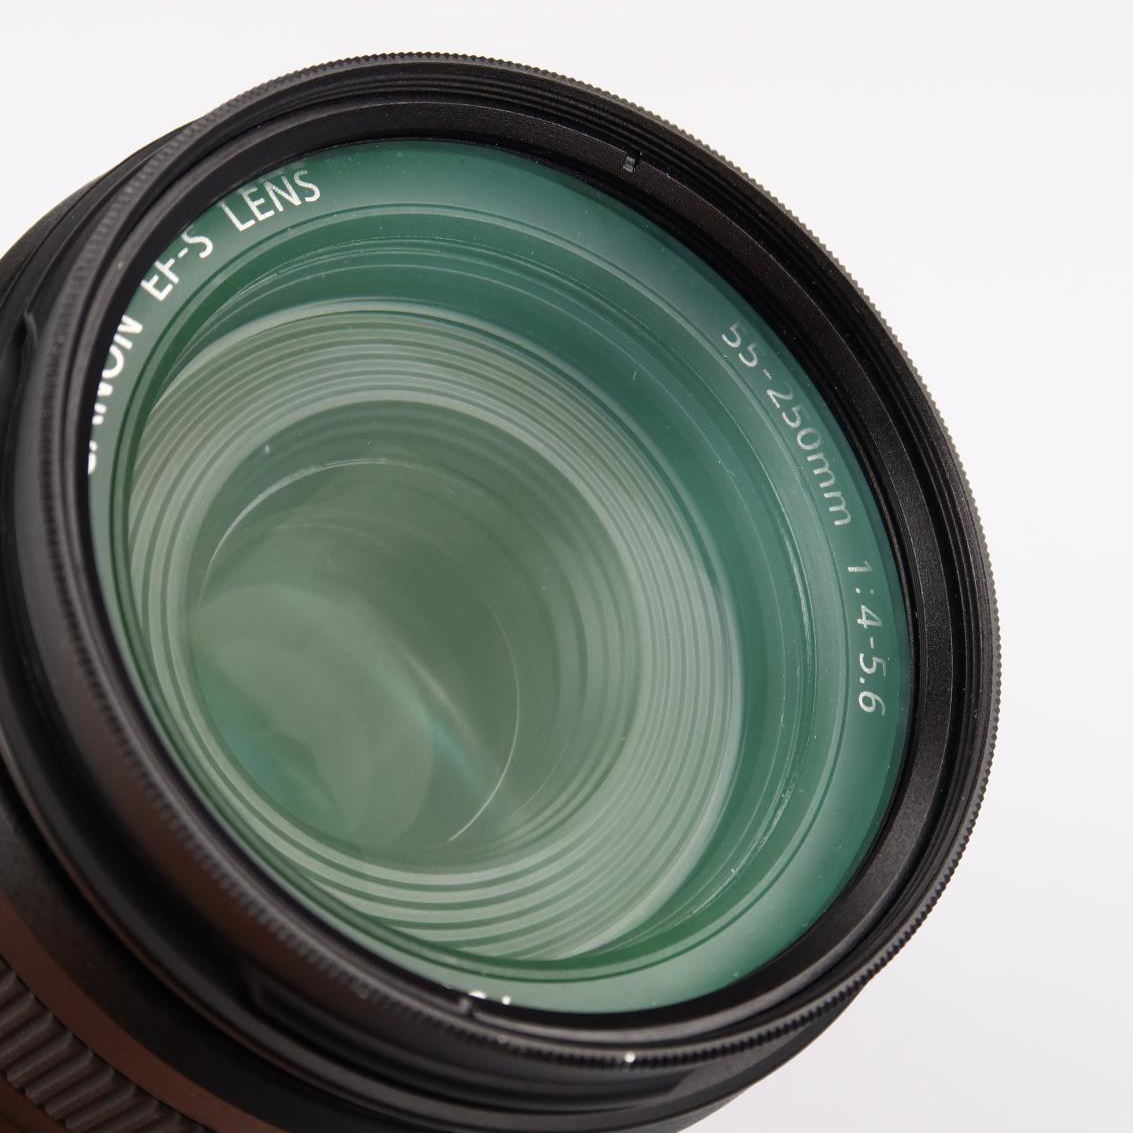 (Myyty) Canon EF-S 55-250mm f/4-5.6 IS II zoom-objektiivi (käytetty)